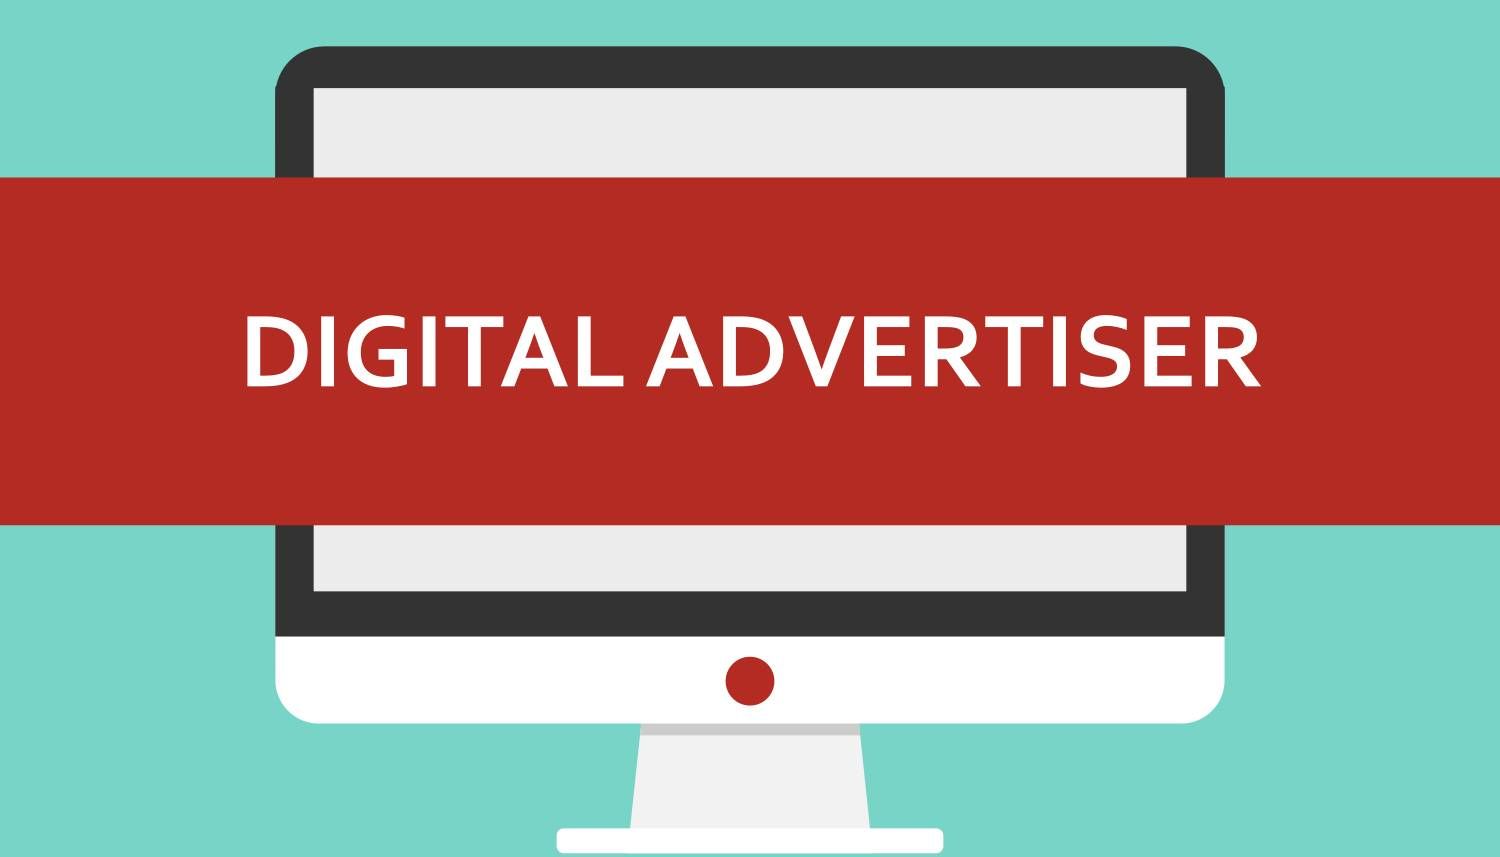 Digital Advertiser